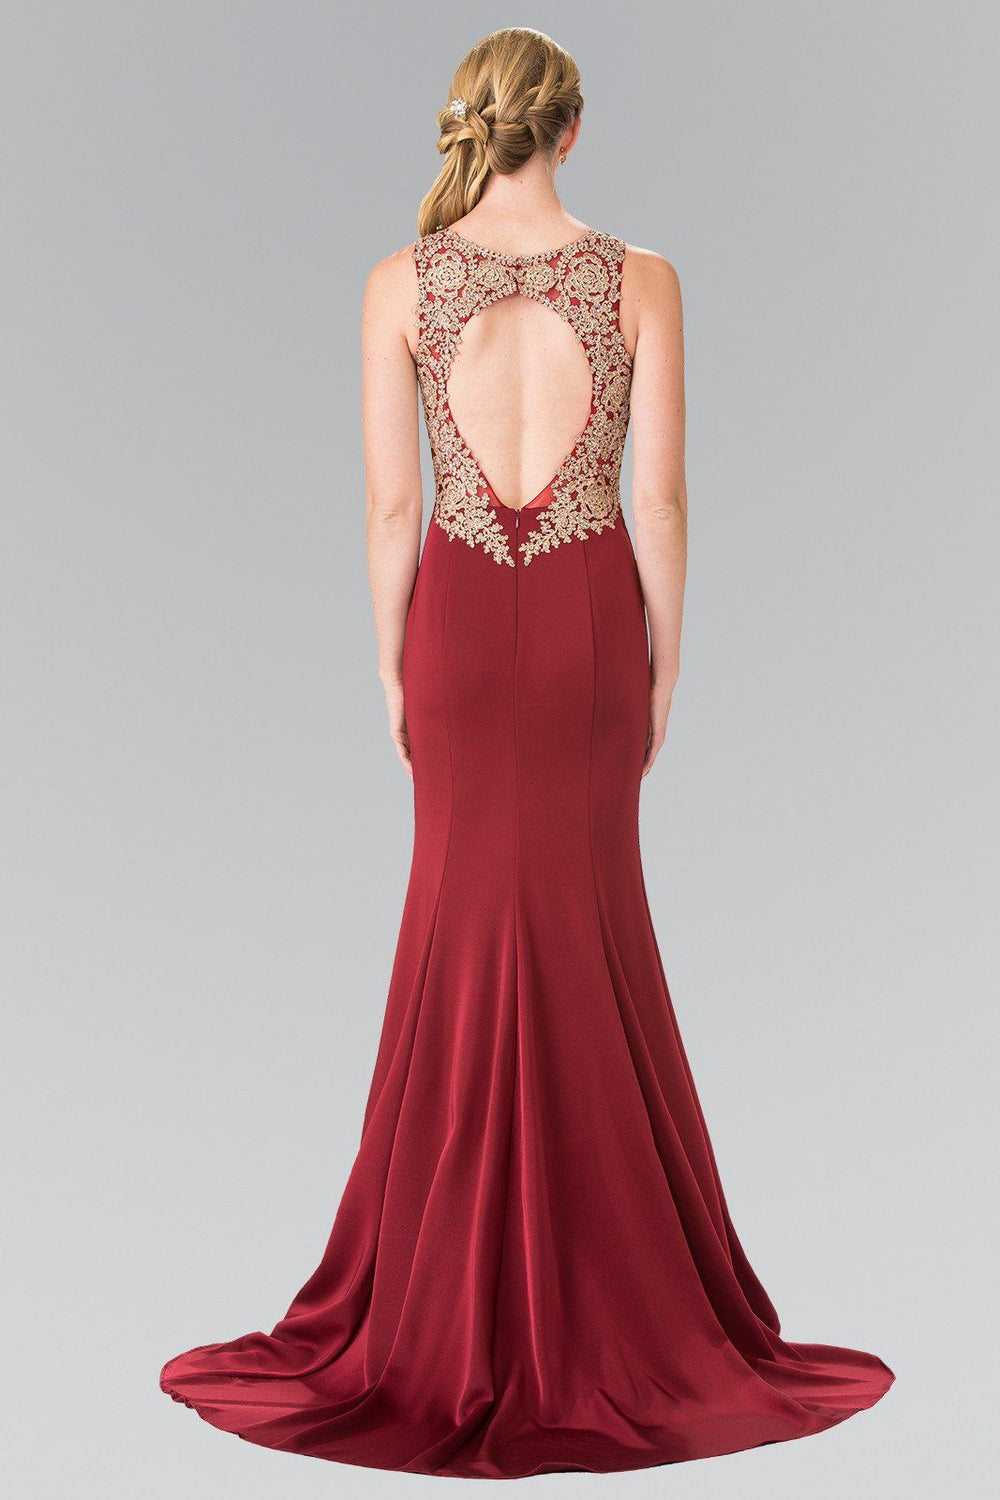 Long Sleeveless Embroidered Dress by Elizabeth K GL2312-Long Formal Dresses-ABC Fashion